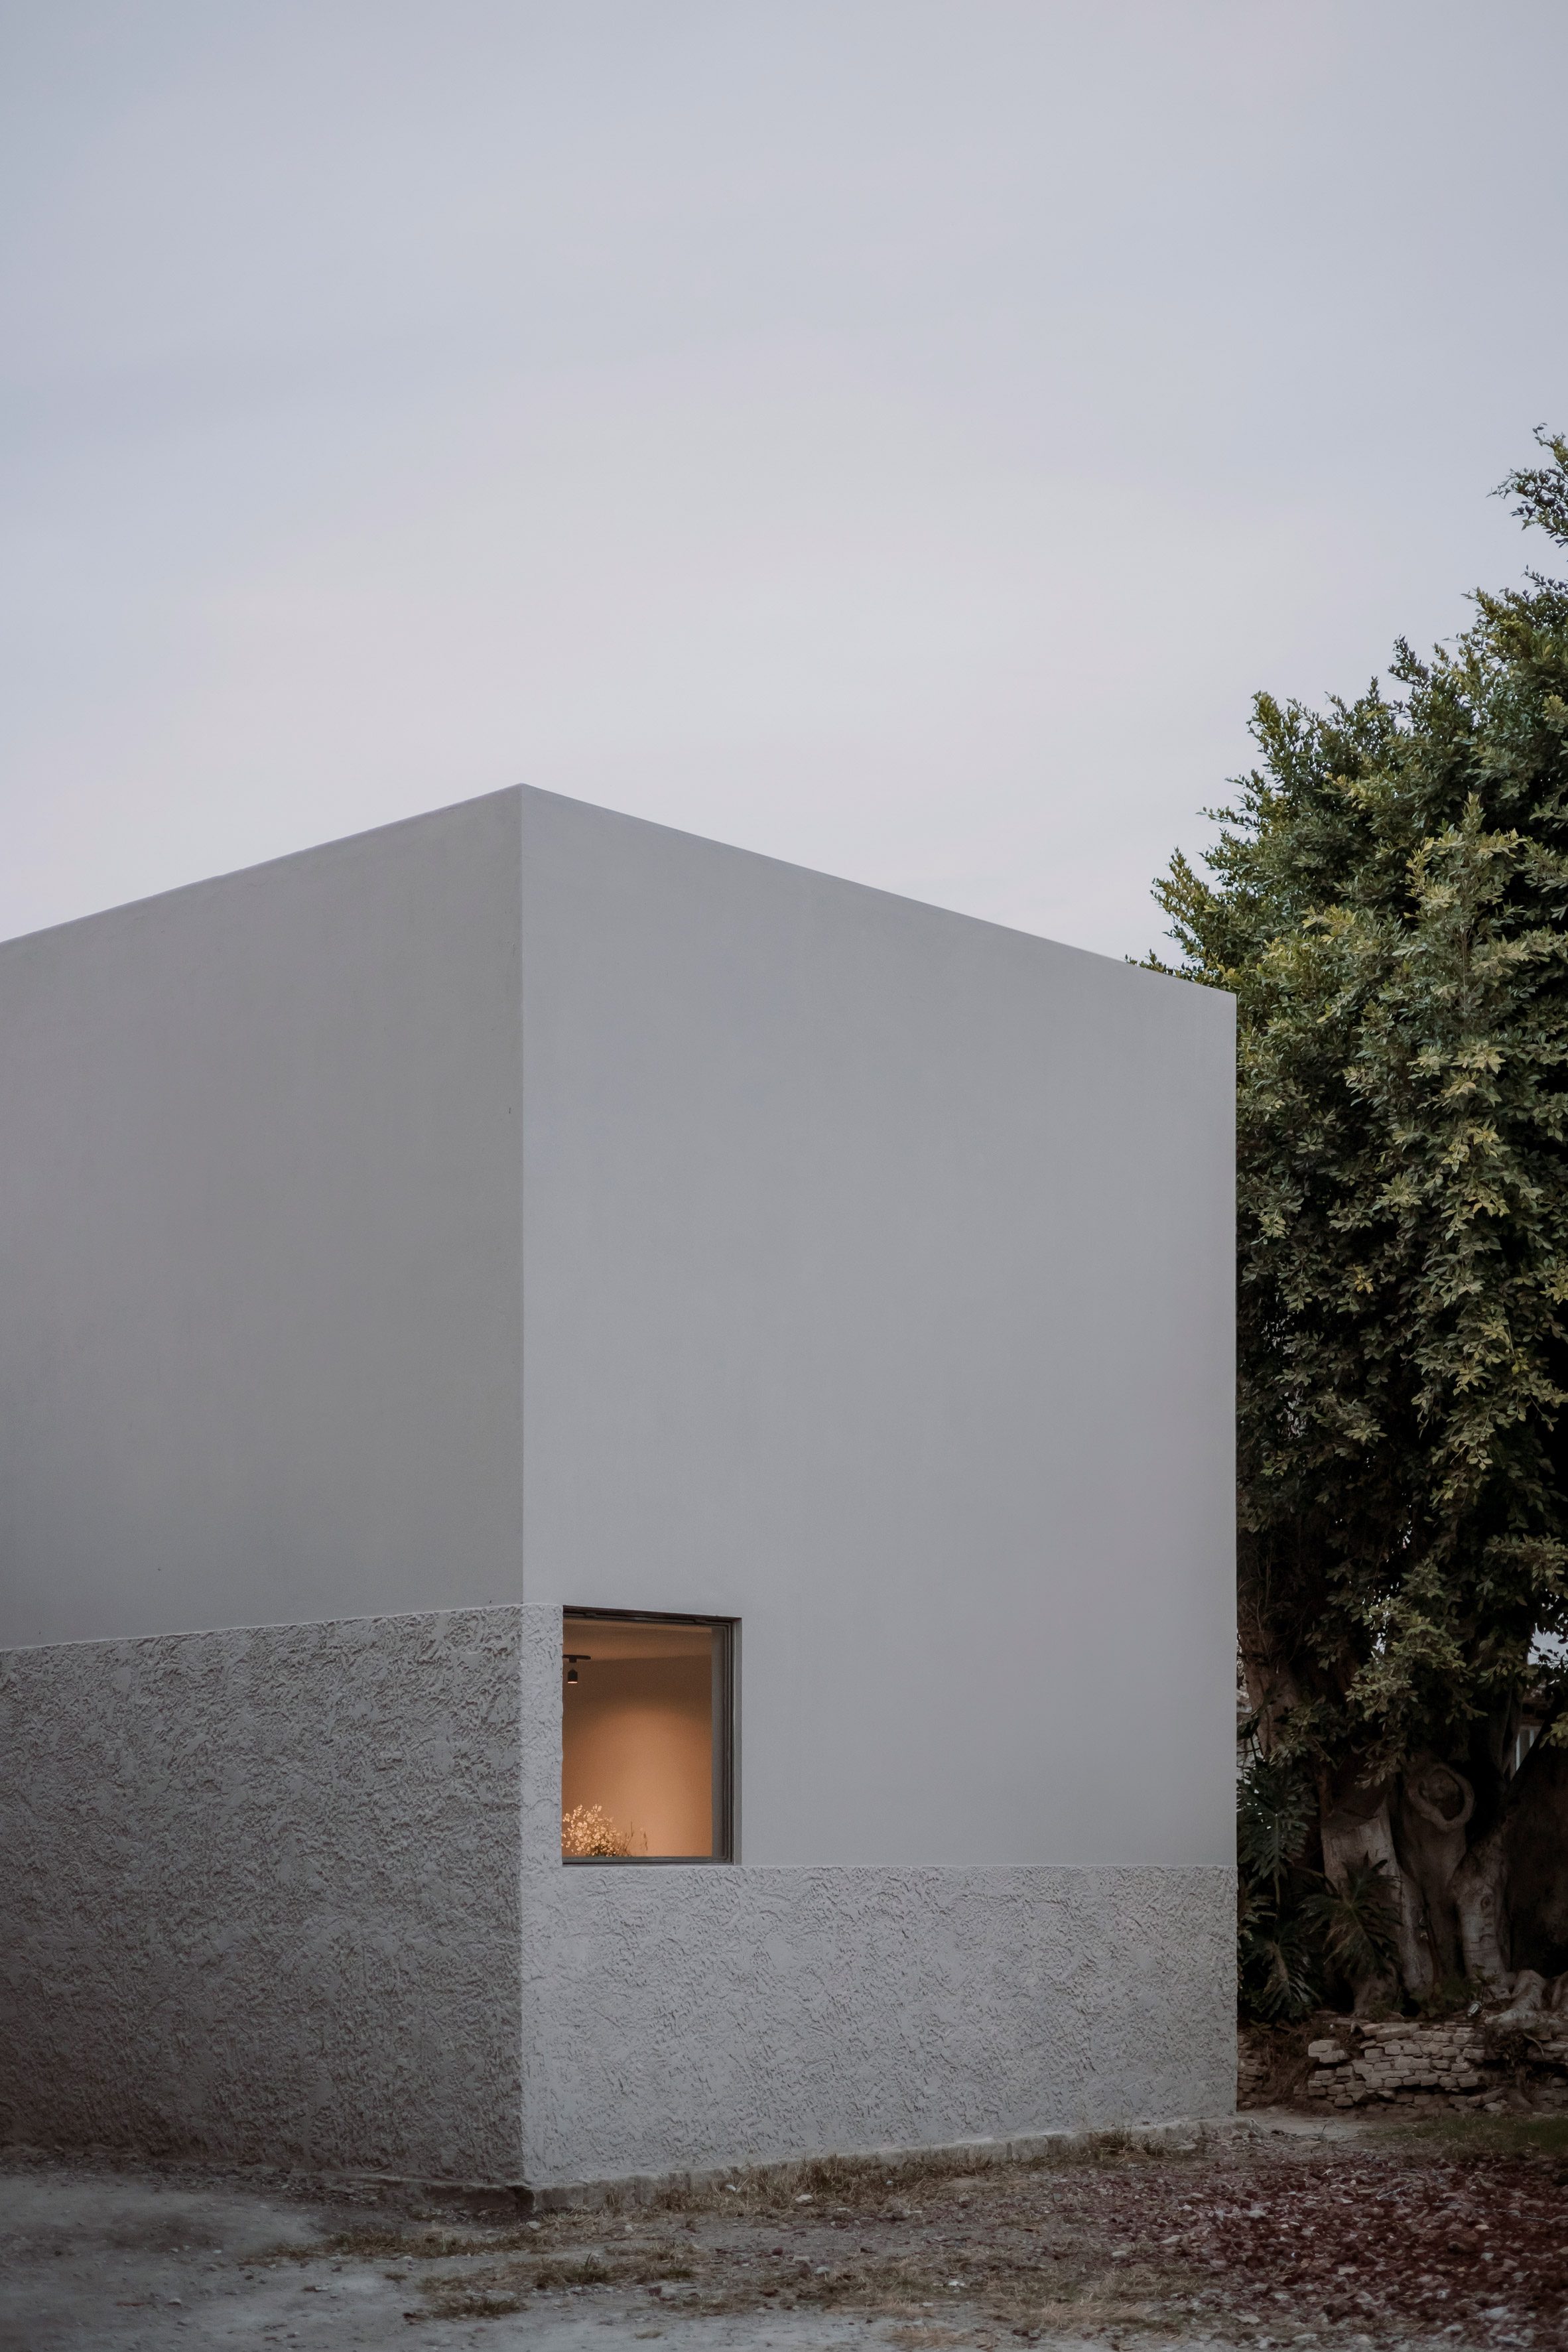 Moises Sánchez使用当地建筑方法建造墨西哥立方体房屋|ART-Arrakis | 建筑室内设计的创新与灵感